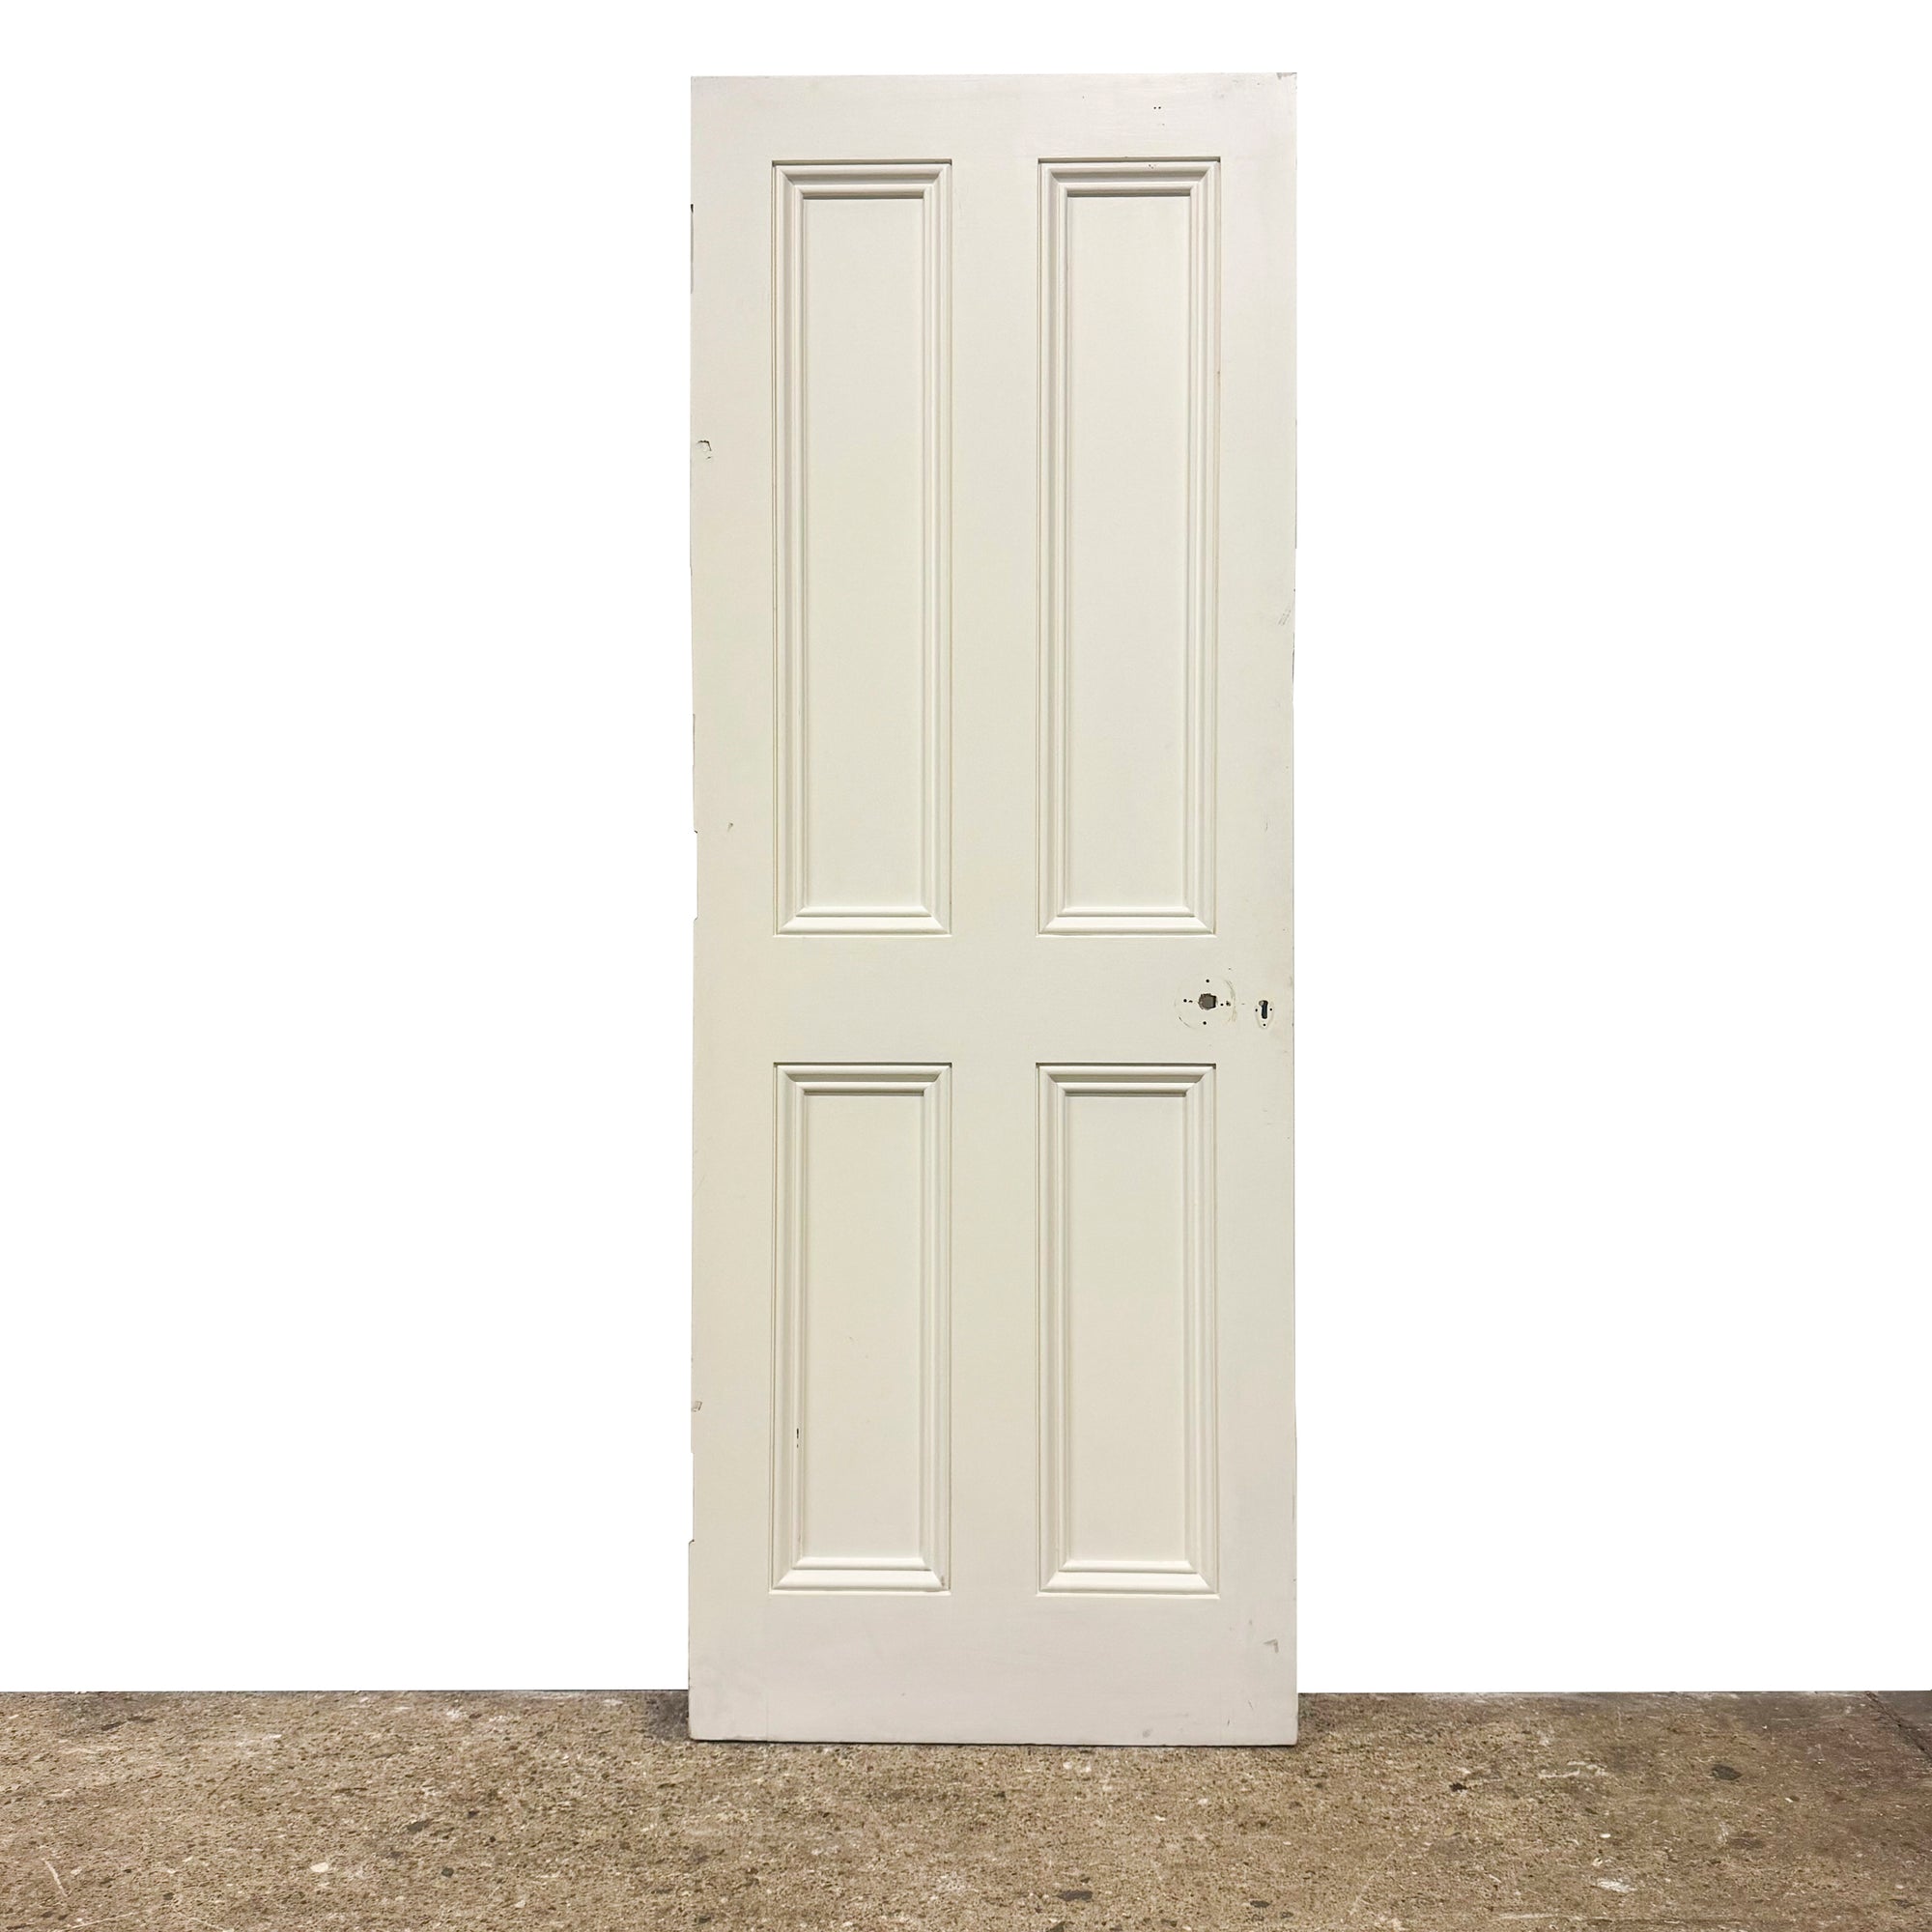 Reclaimed White Tulip Wood 4 Panel Door - 196.5cm x 72cm | The Architectural Forum